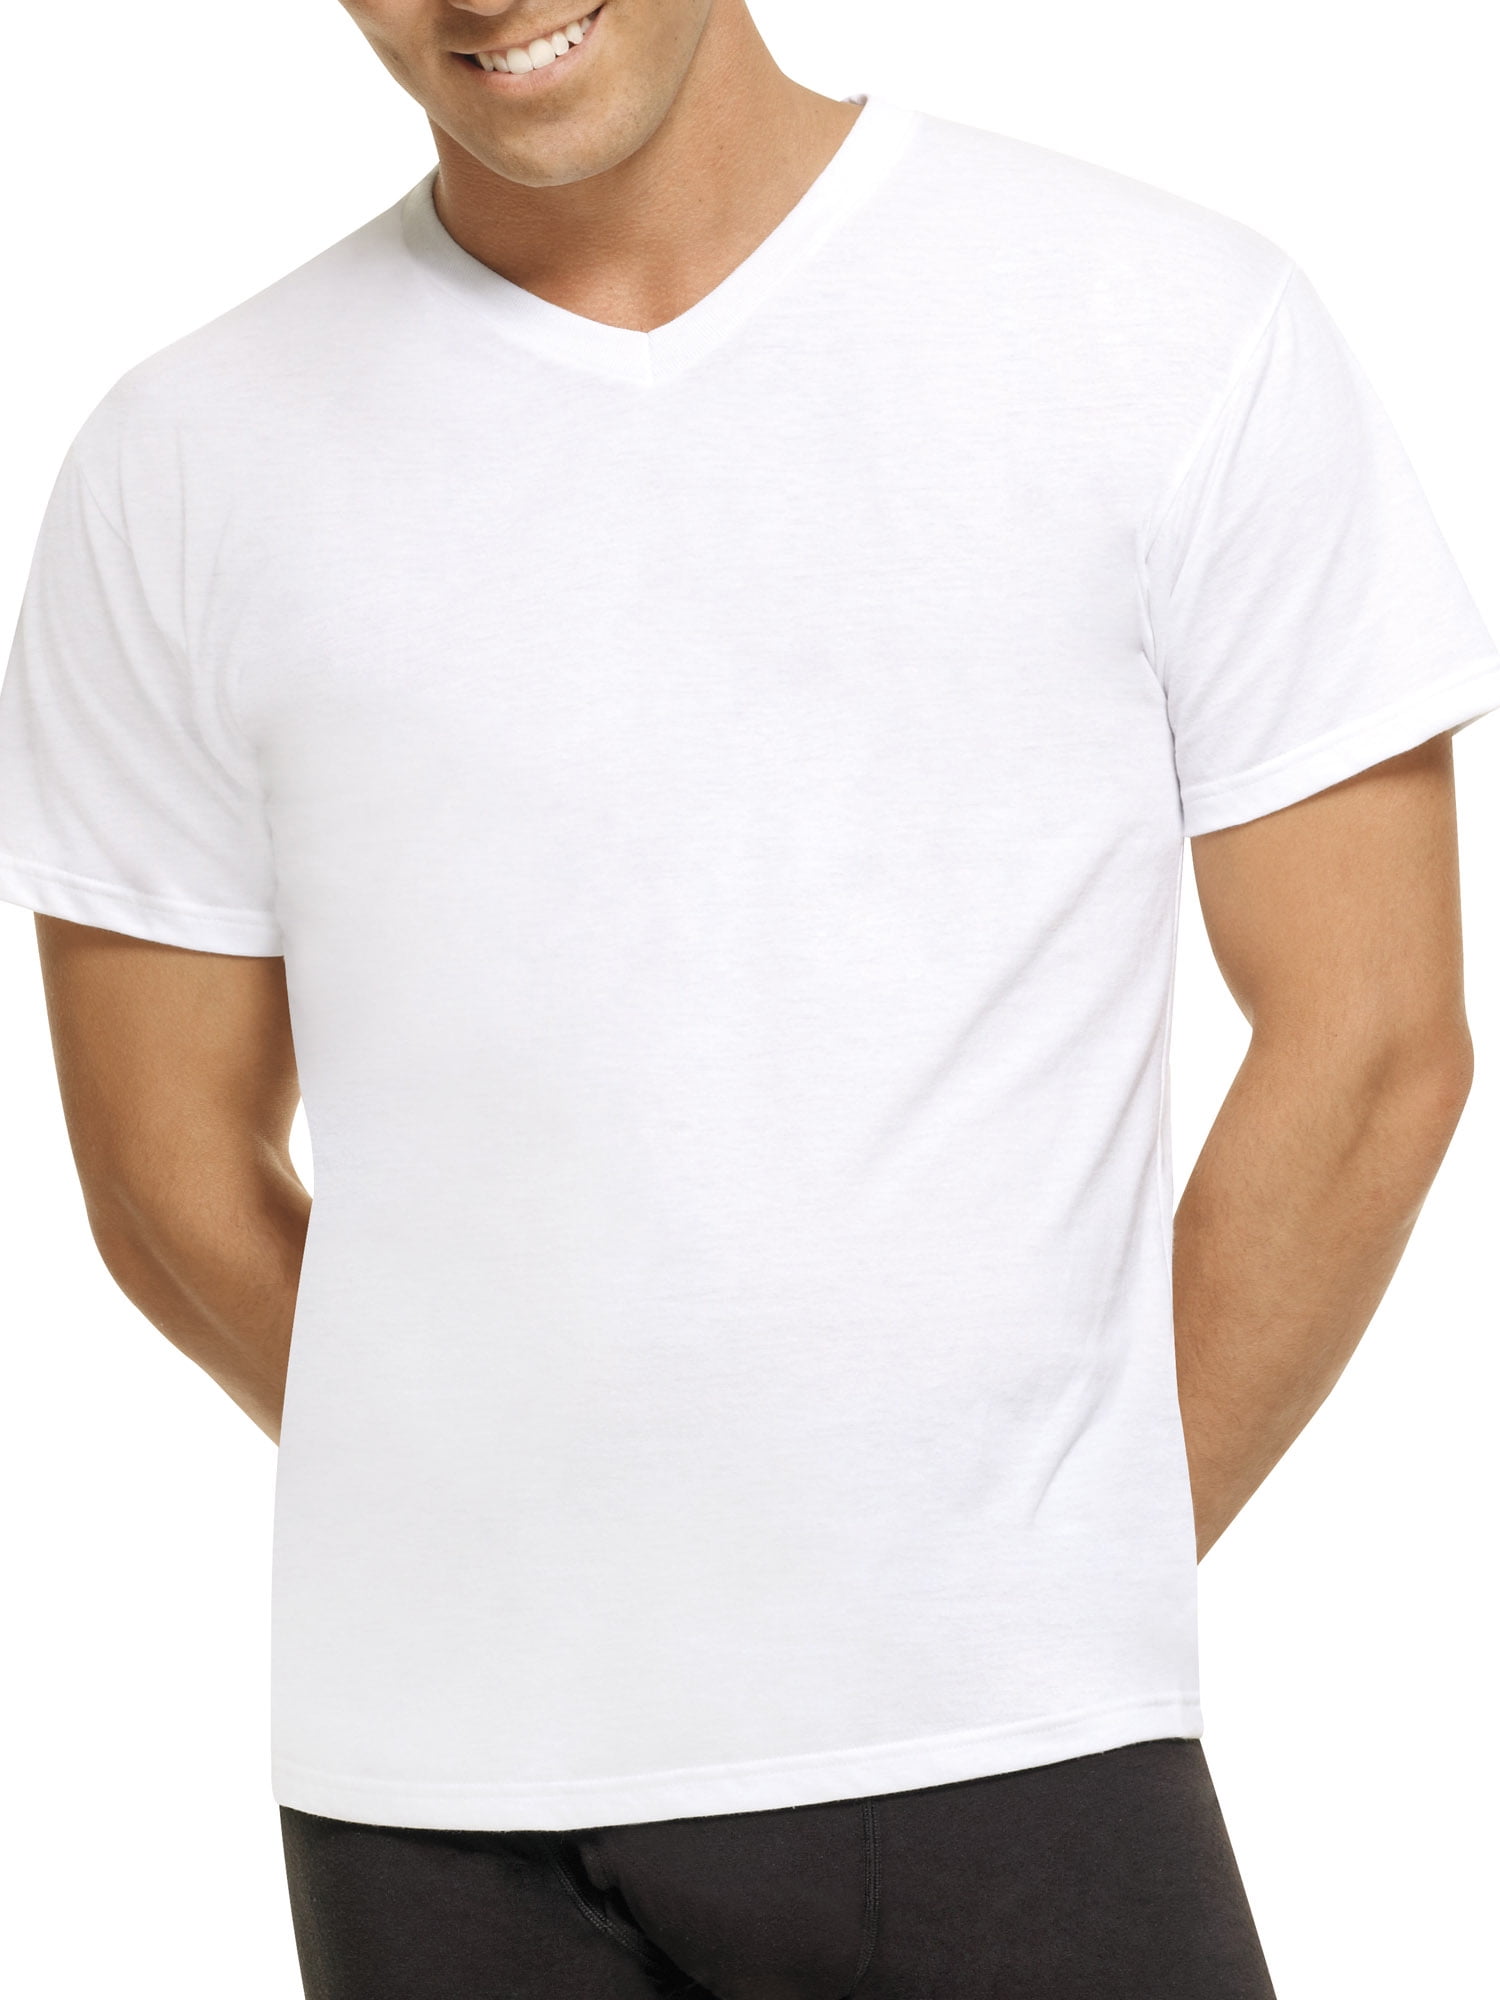 Hanes Men's ComfortBlend White V-Neck T-Shirts